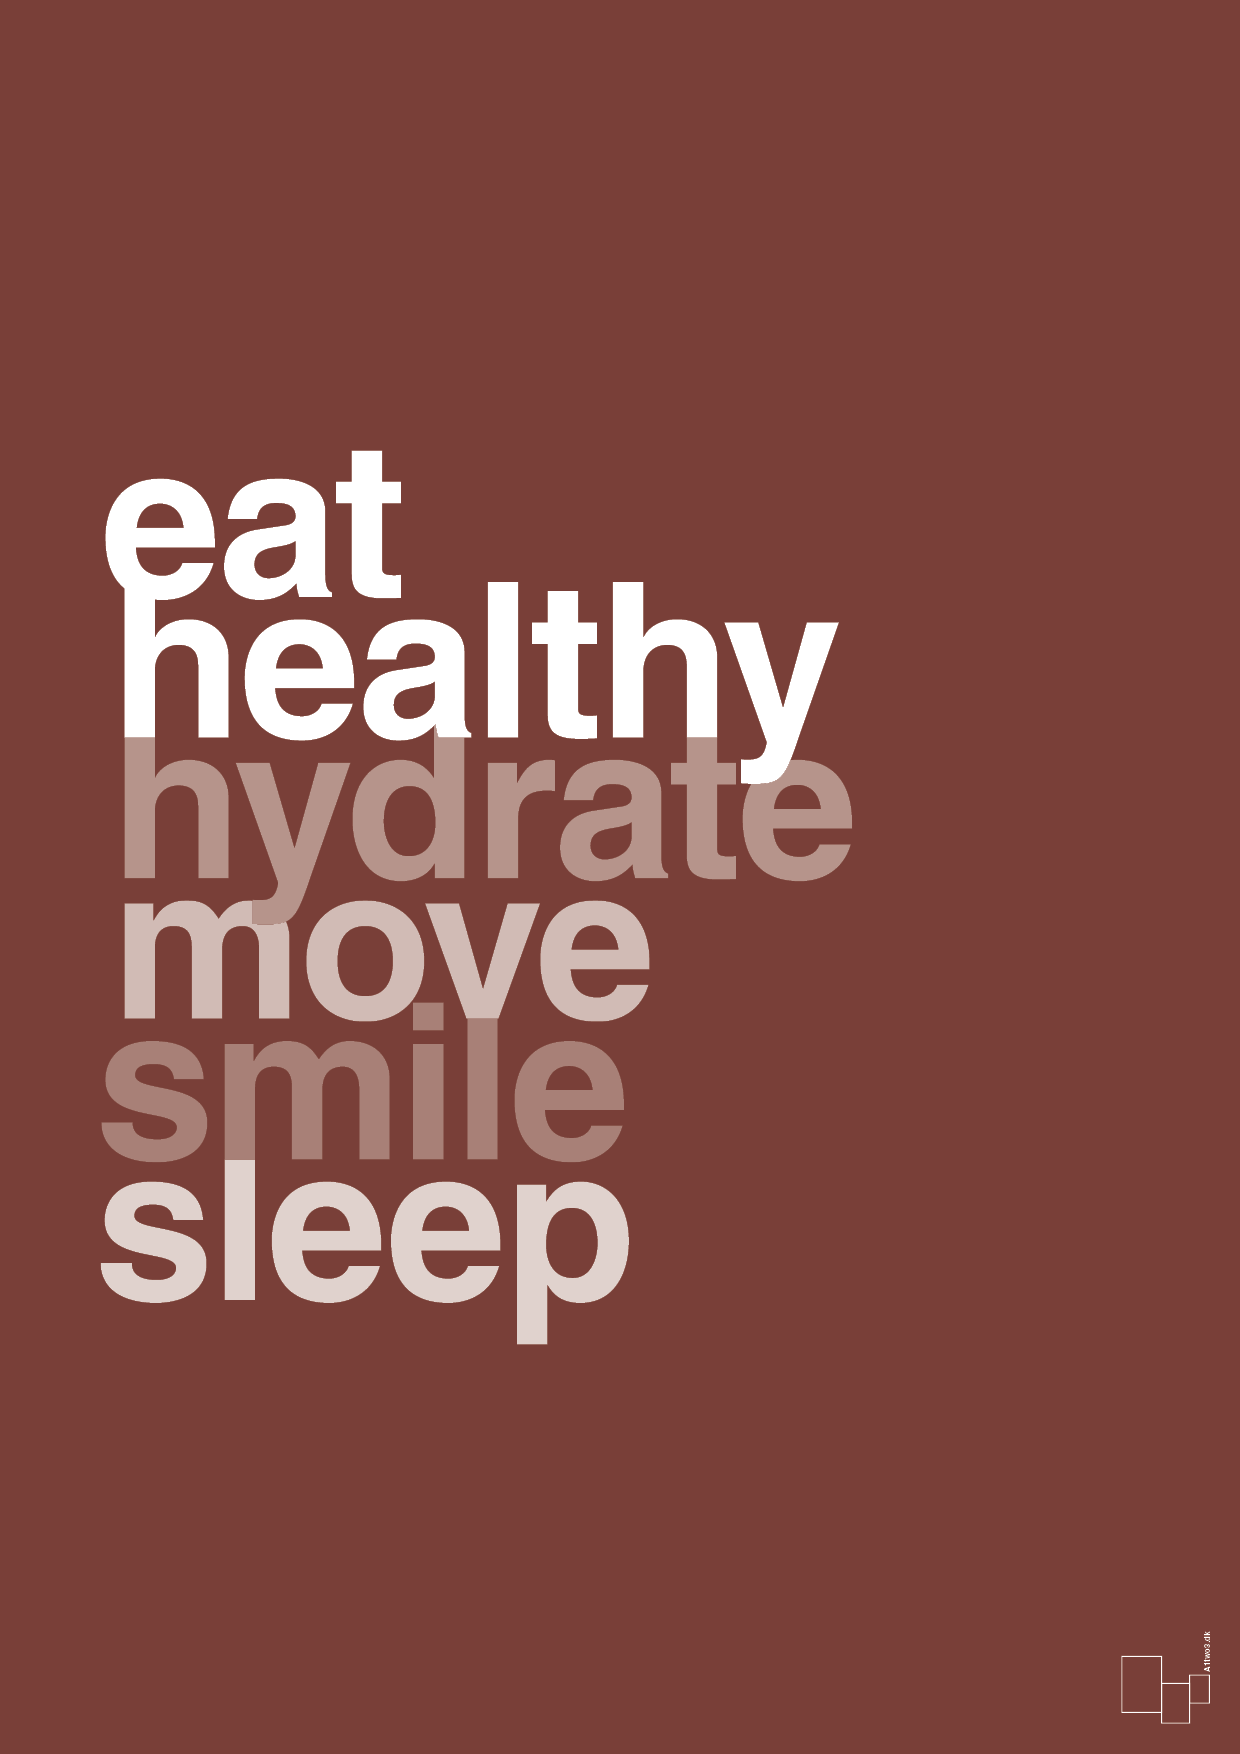 eat healthy hydrate move smile sleep - Plakat med Ordsprog i Red Pepper